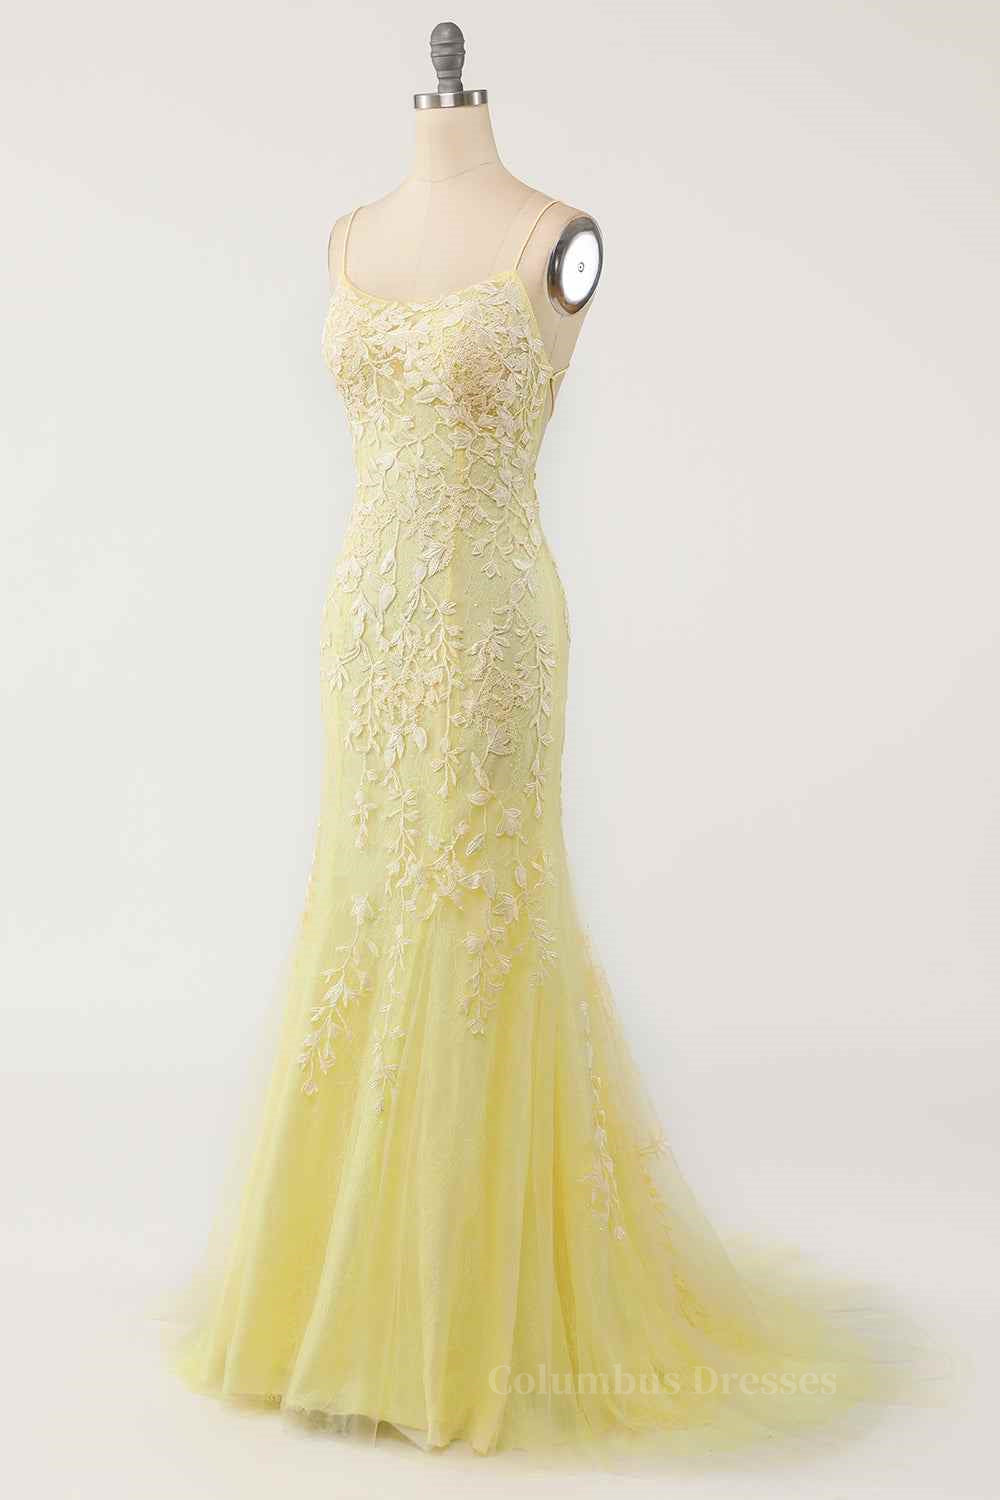 Bridesmaid Dresses Under 130, Light Yellow Light Blue Mermaid Scoop Neckline Applique Lace-Up Back Long Prom Gown